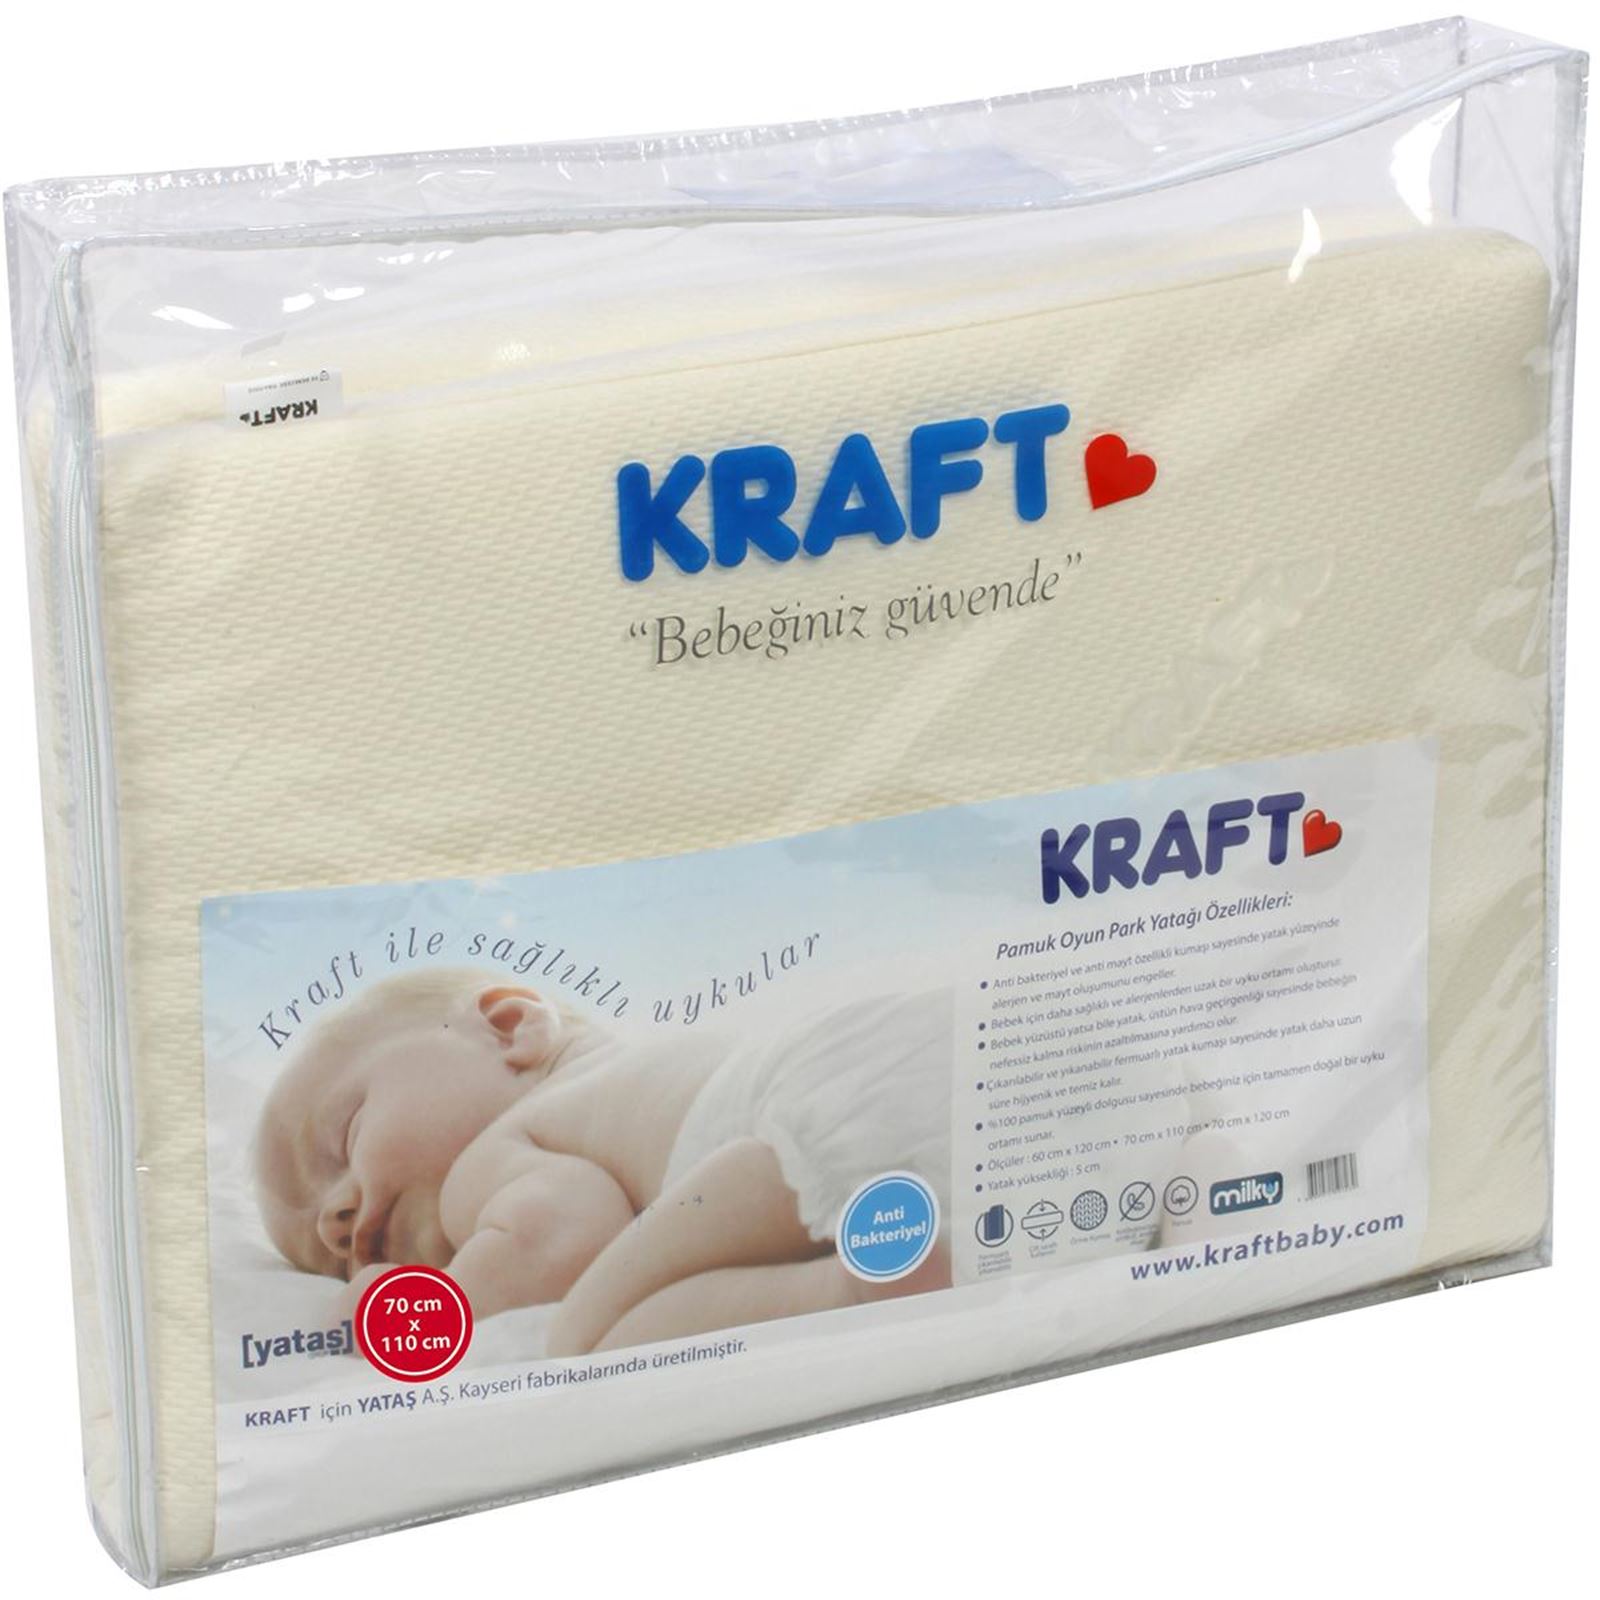 Kraft Yataş Pamuk Oyun Parkı Yatağı 70x110 cm Krem Fiyatı EY TSYTKP2